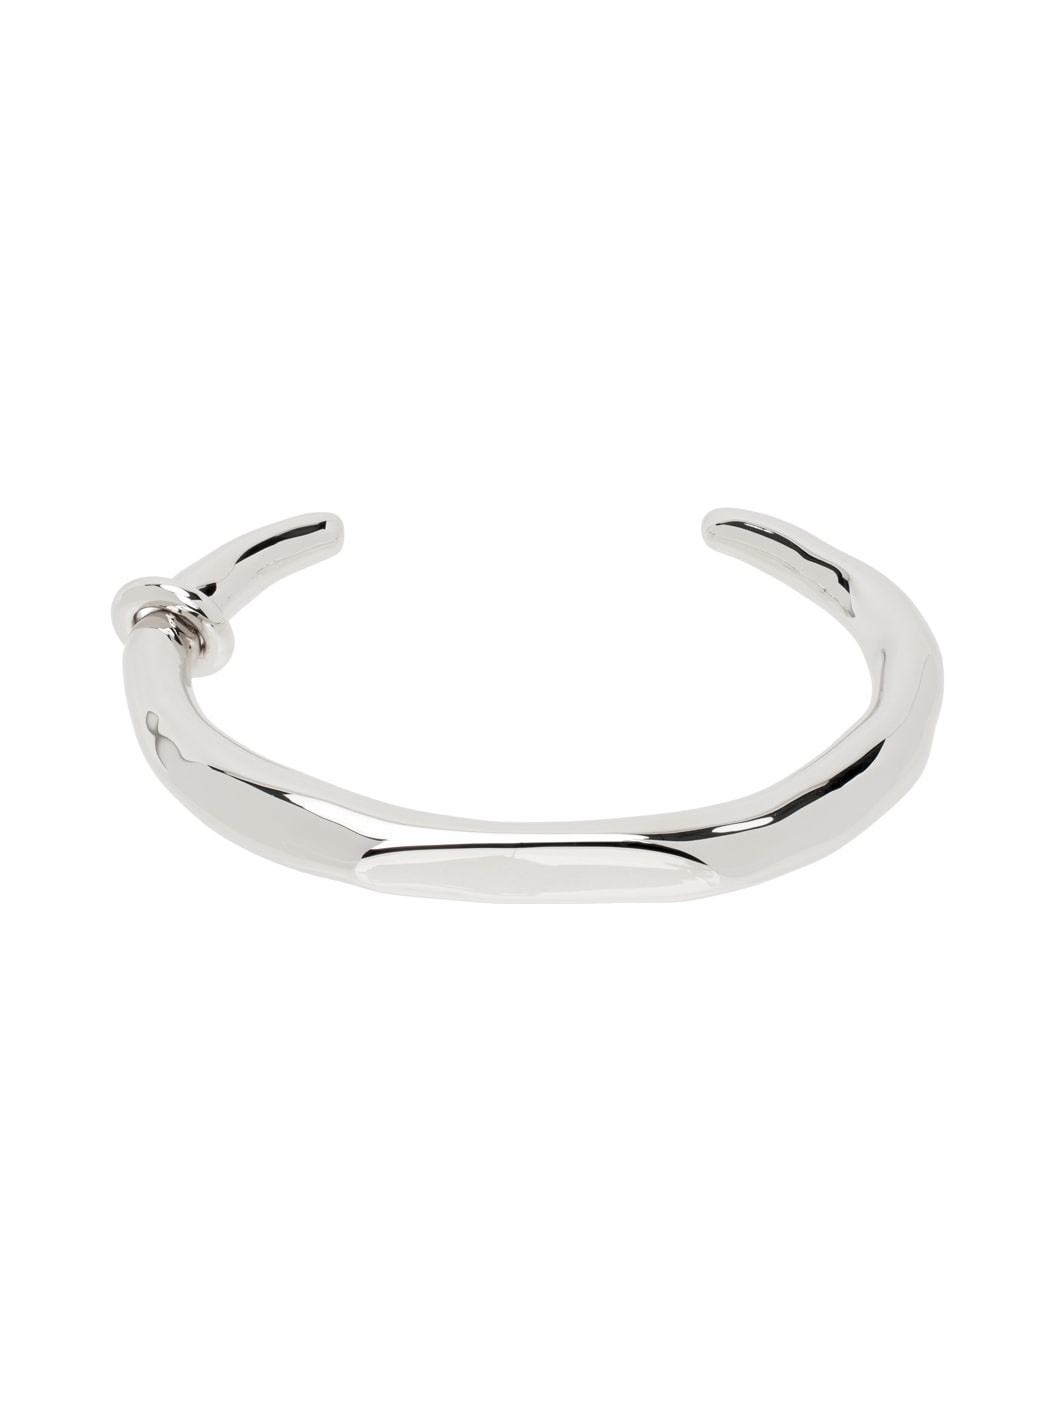 Silver Cuff Bracelet - 1